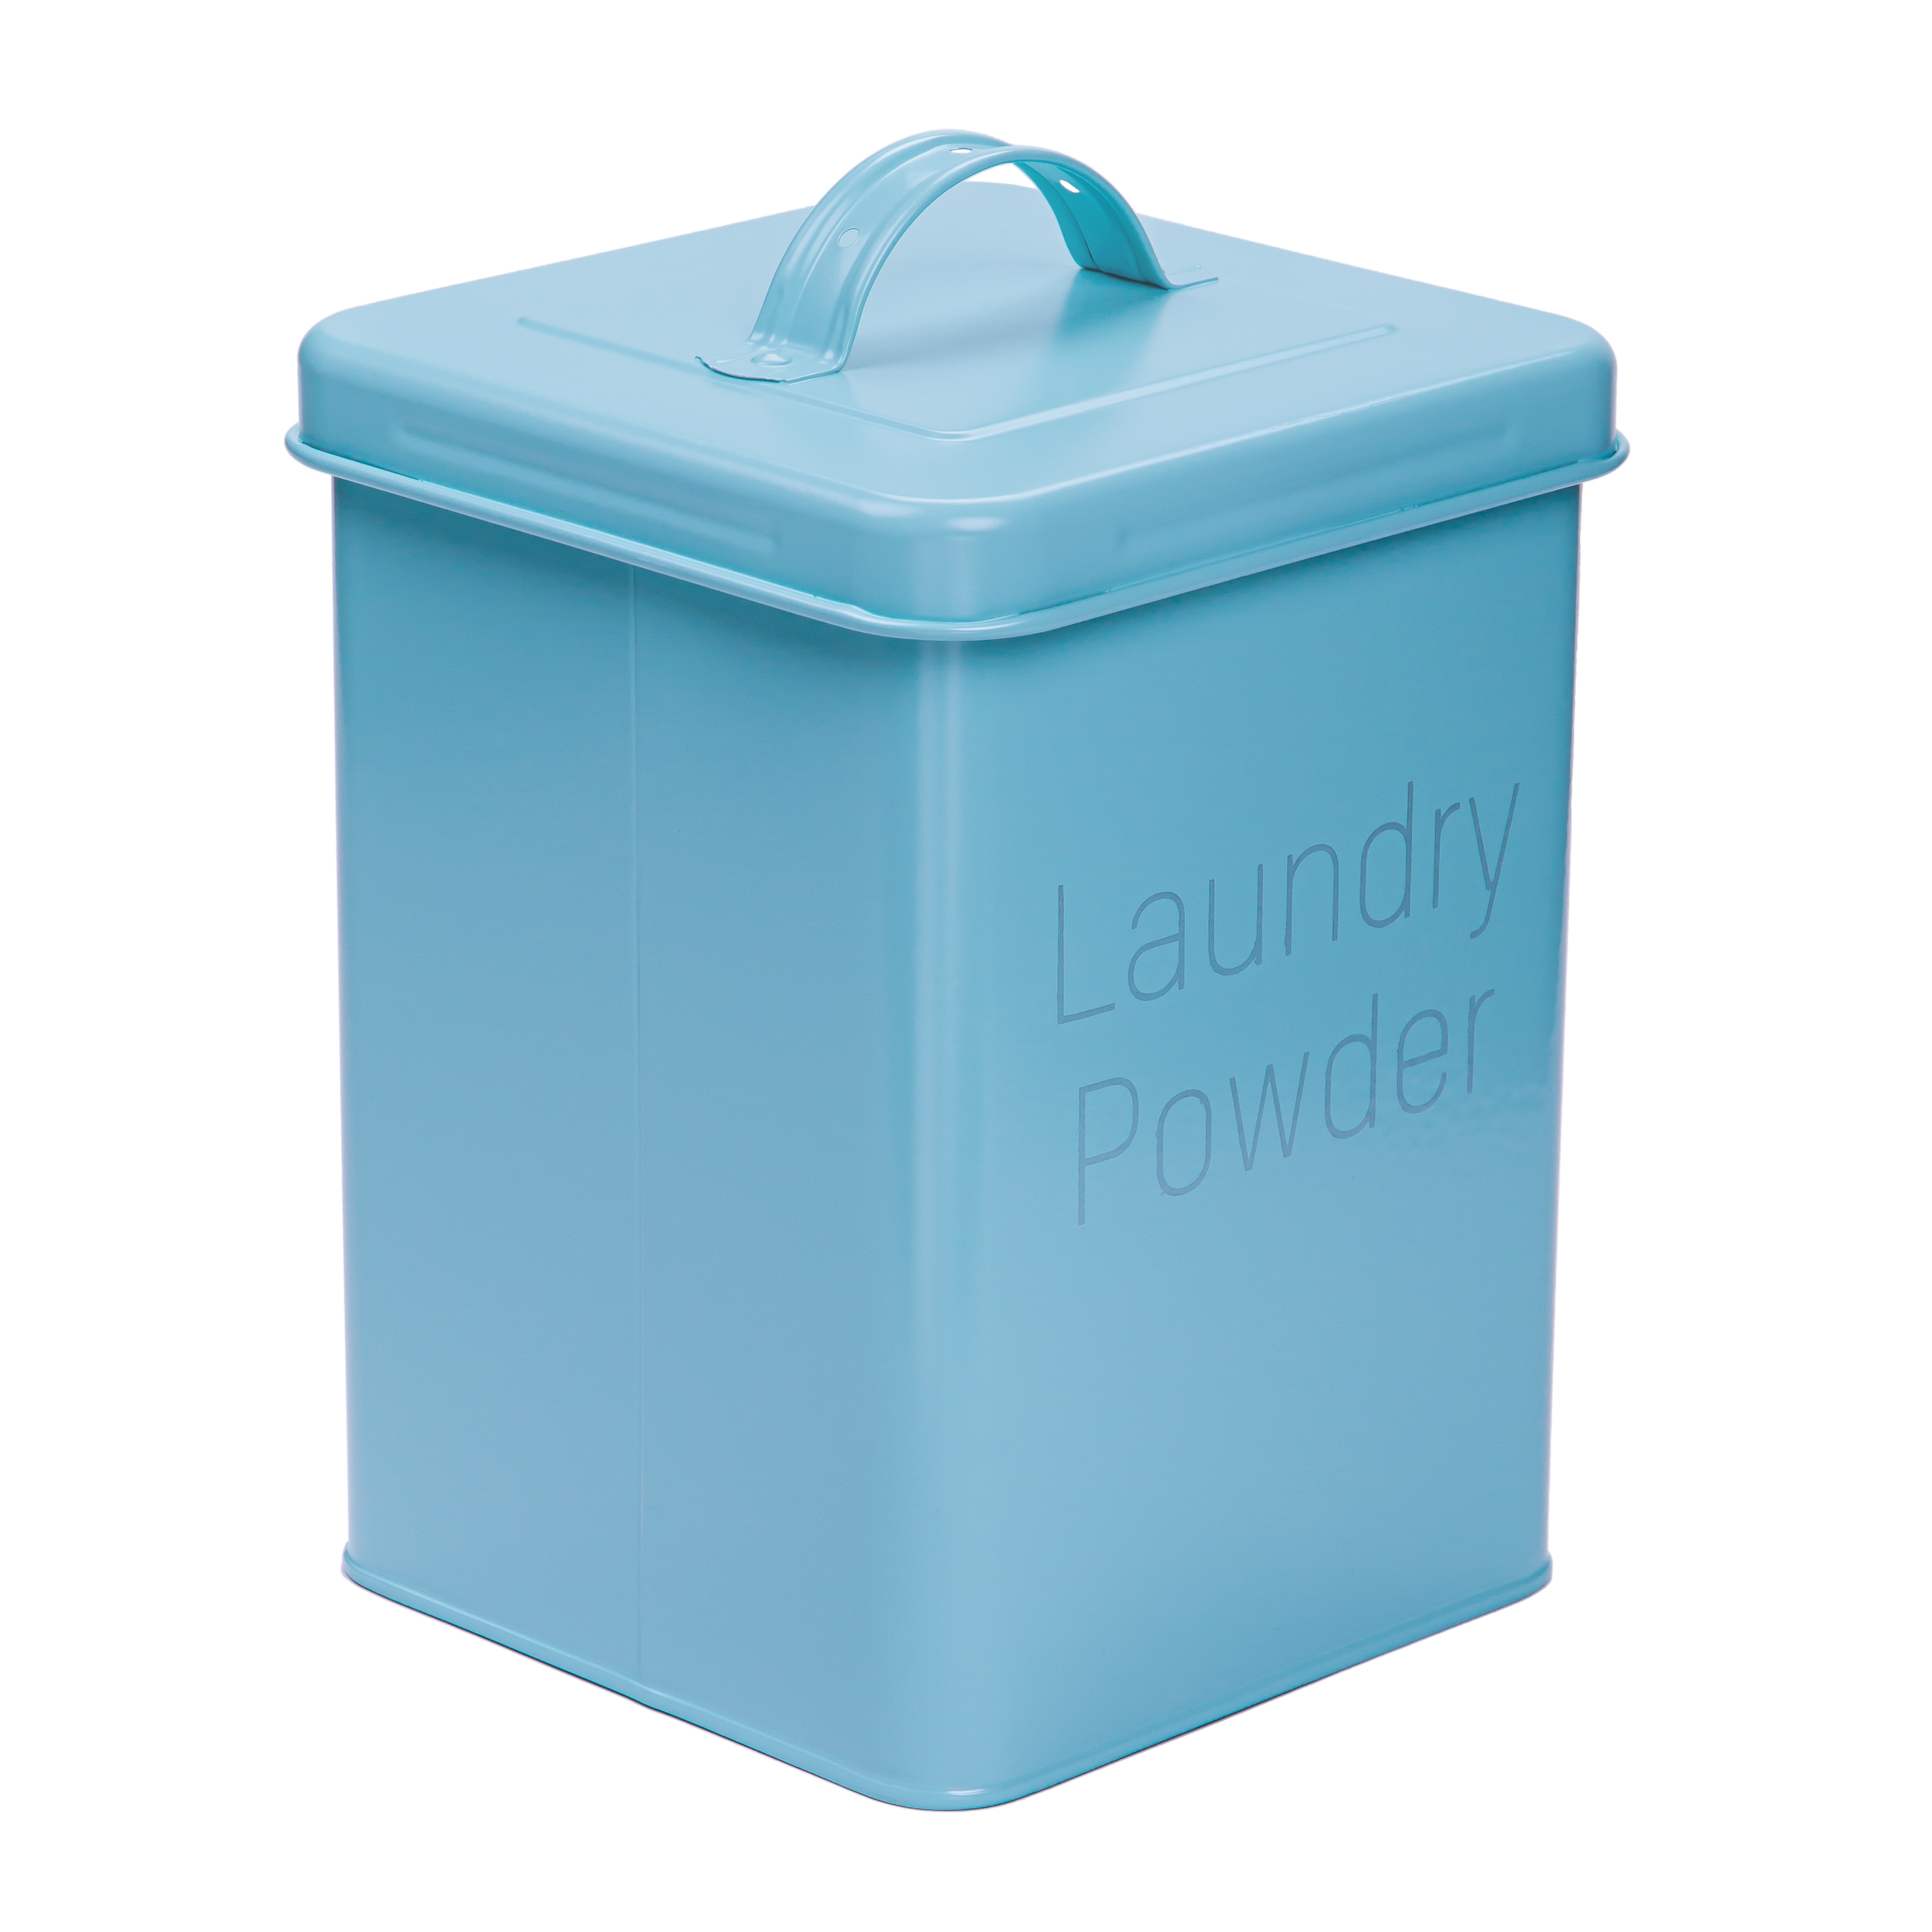 QUVIO Waspoeder box - Blauw - Metaal